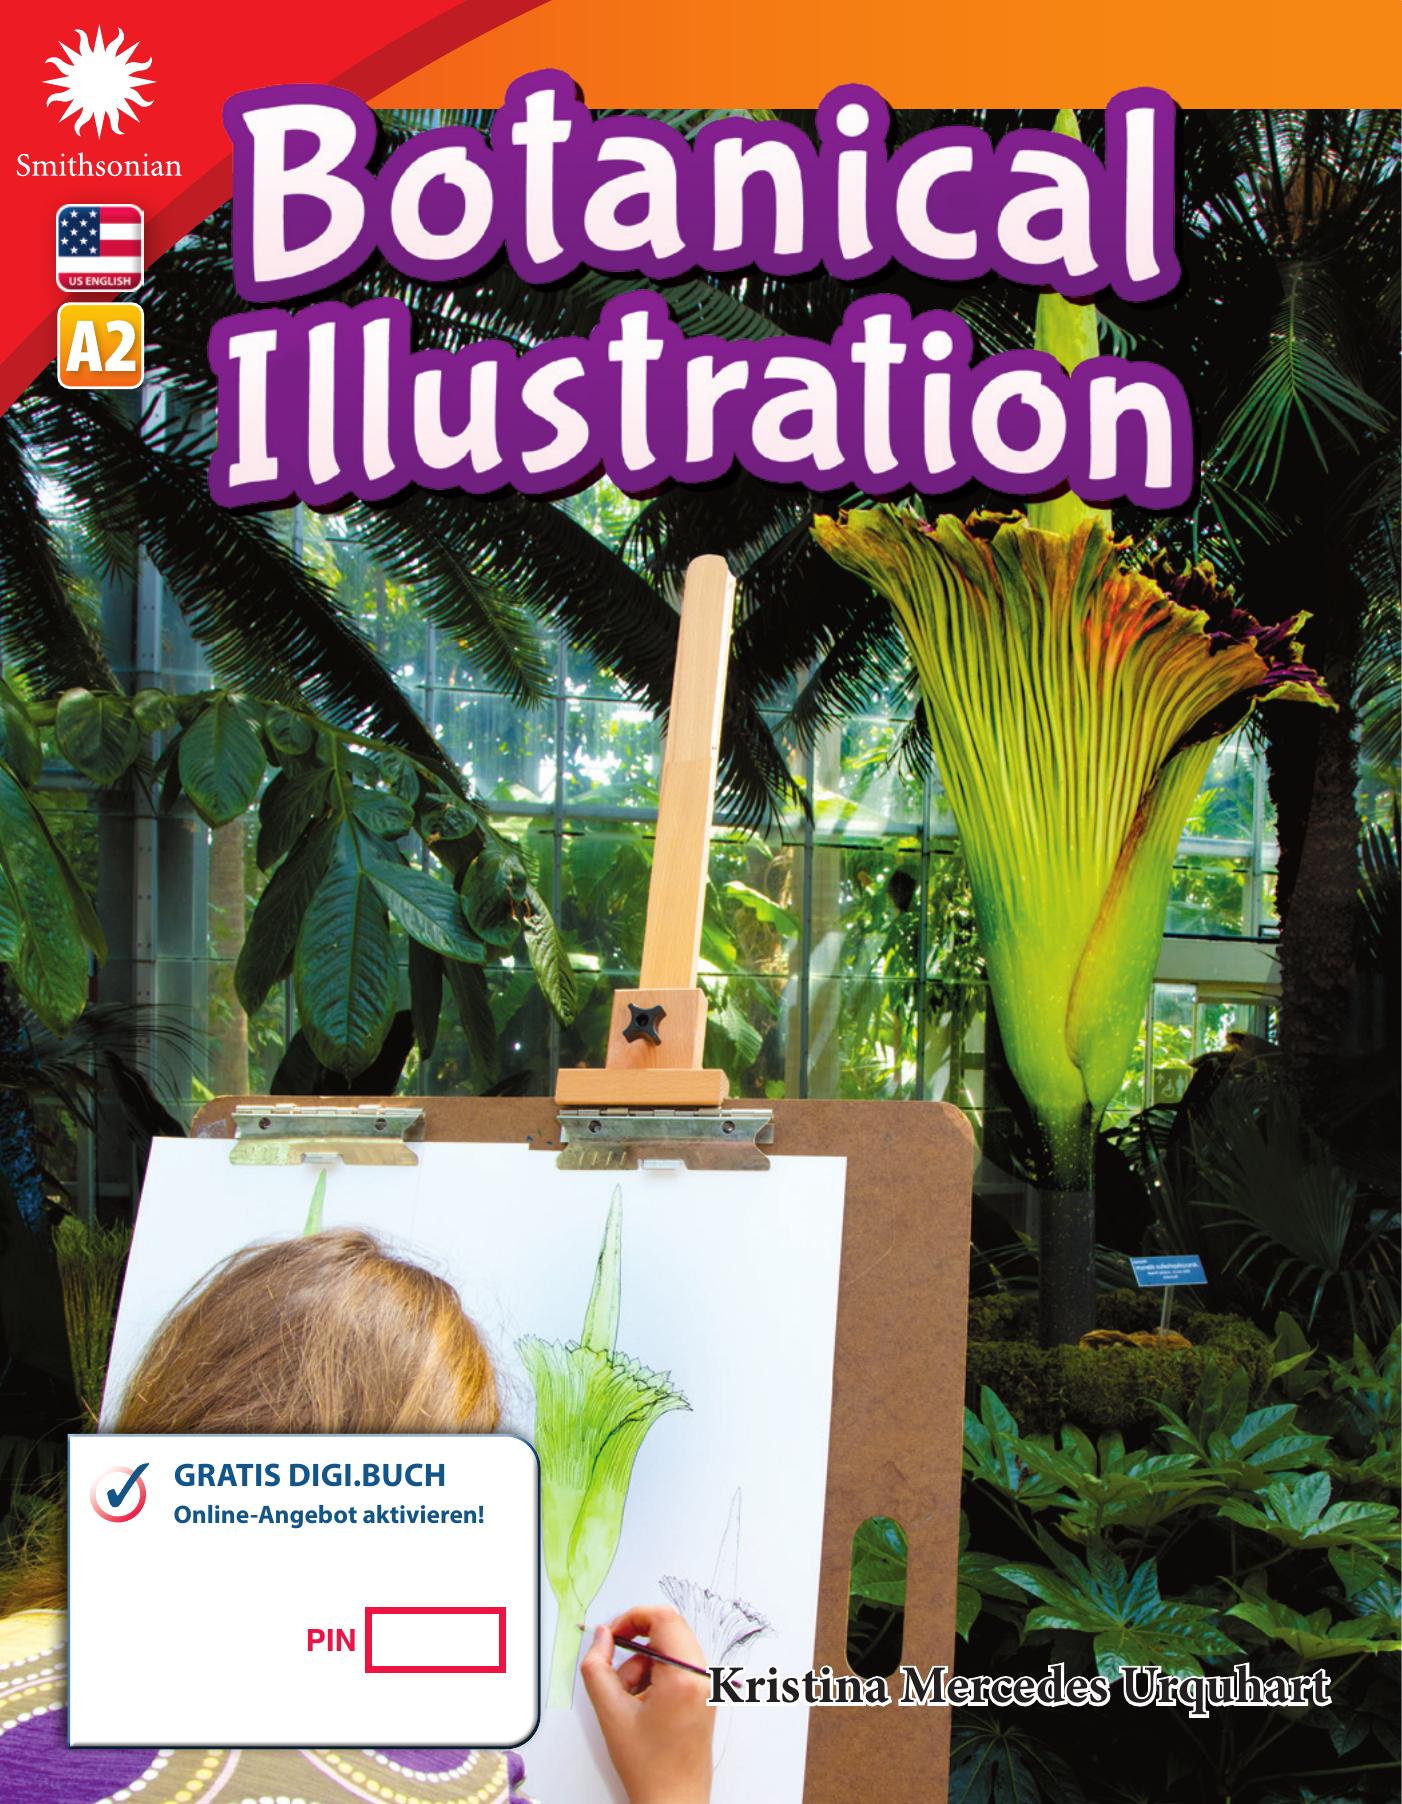 A2 – Botanical Illustration